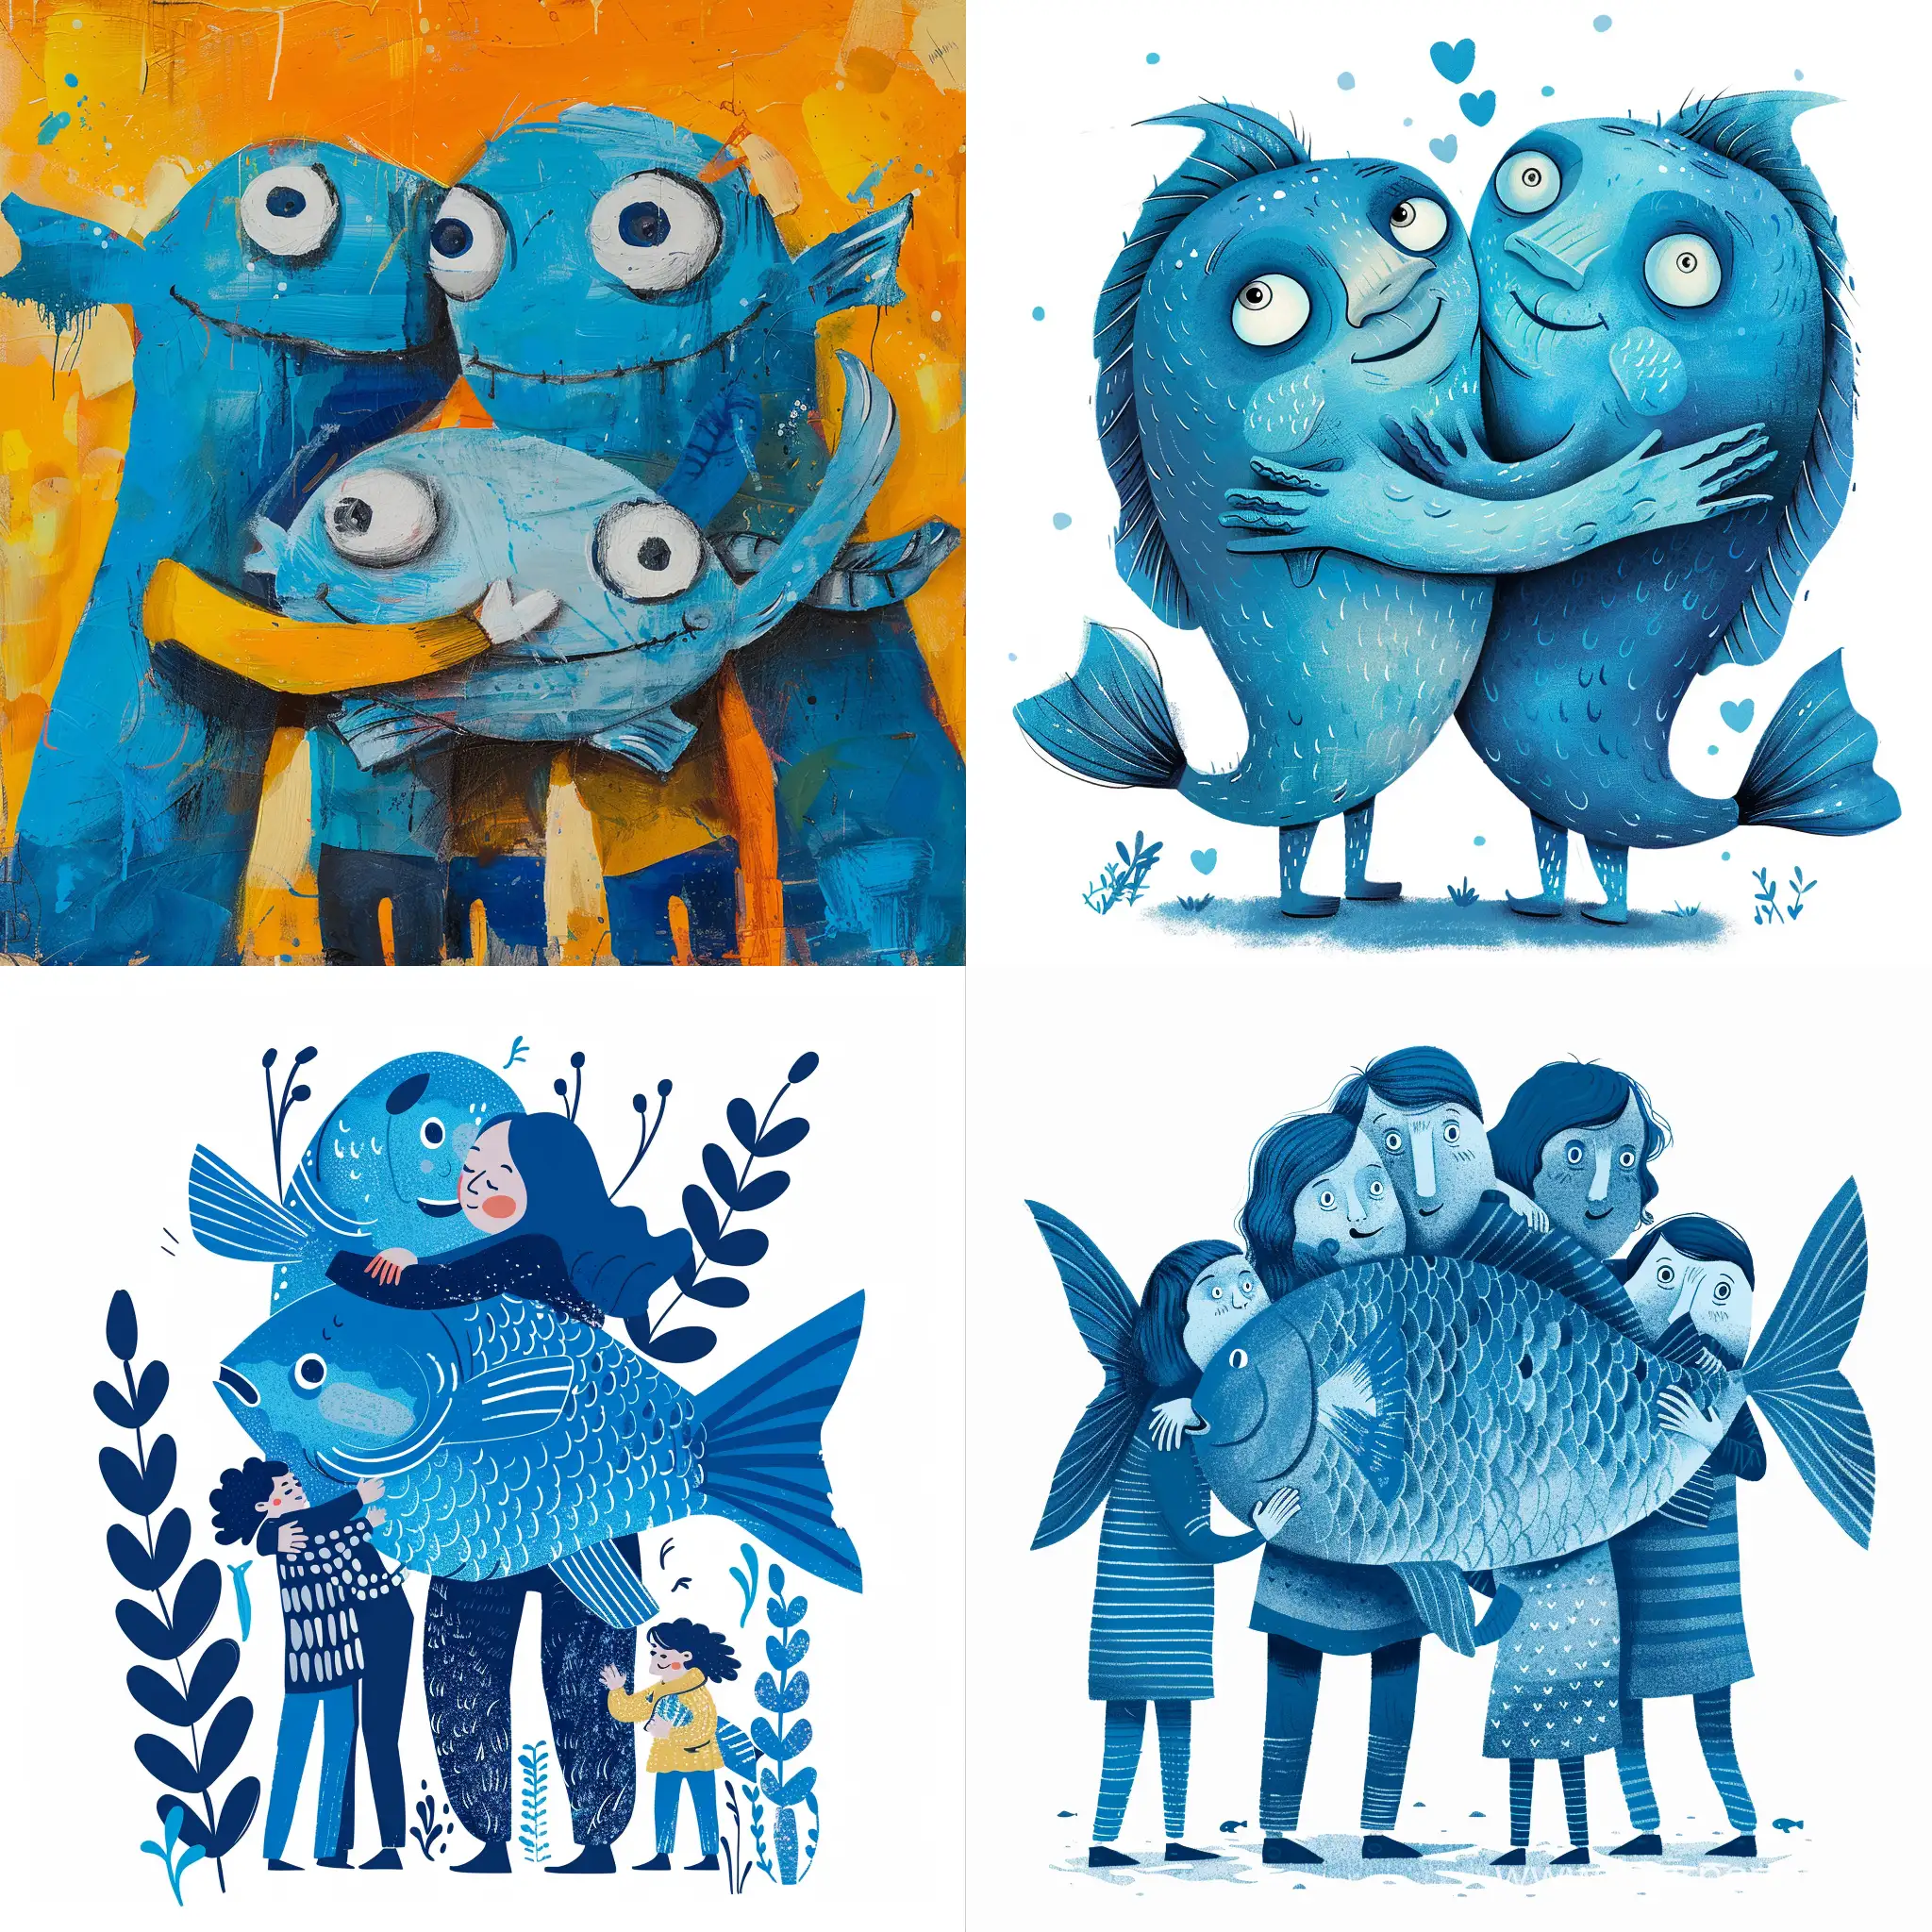 Friendly-Blue-Fish-Embracing-People-in-Heartwarming-Gesture